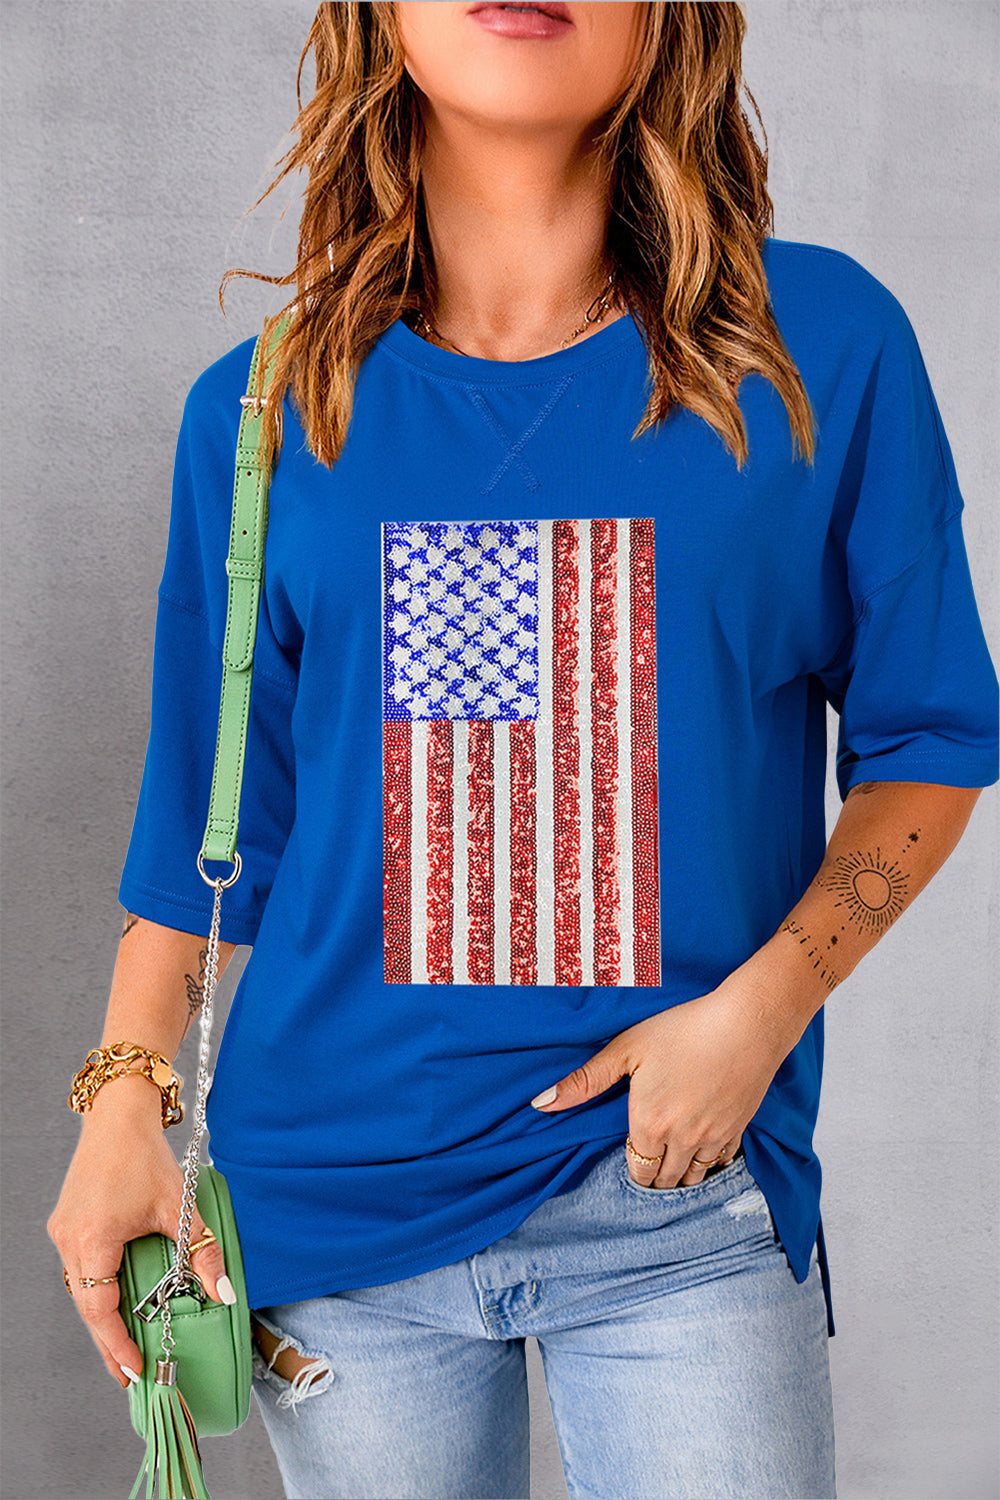 US Flag Round Neck Half Sleeve T-Shirt Royal Blue